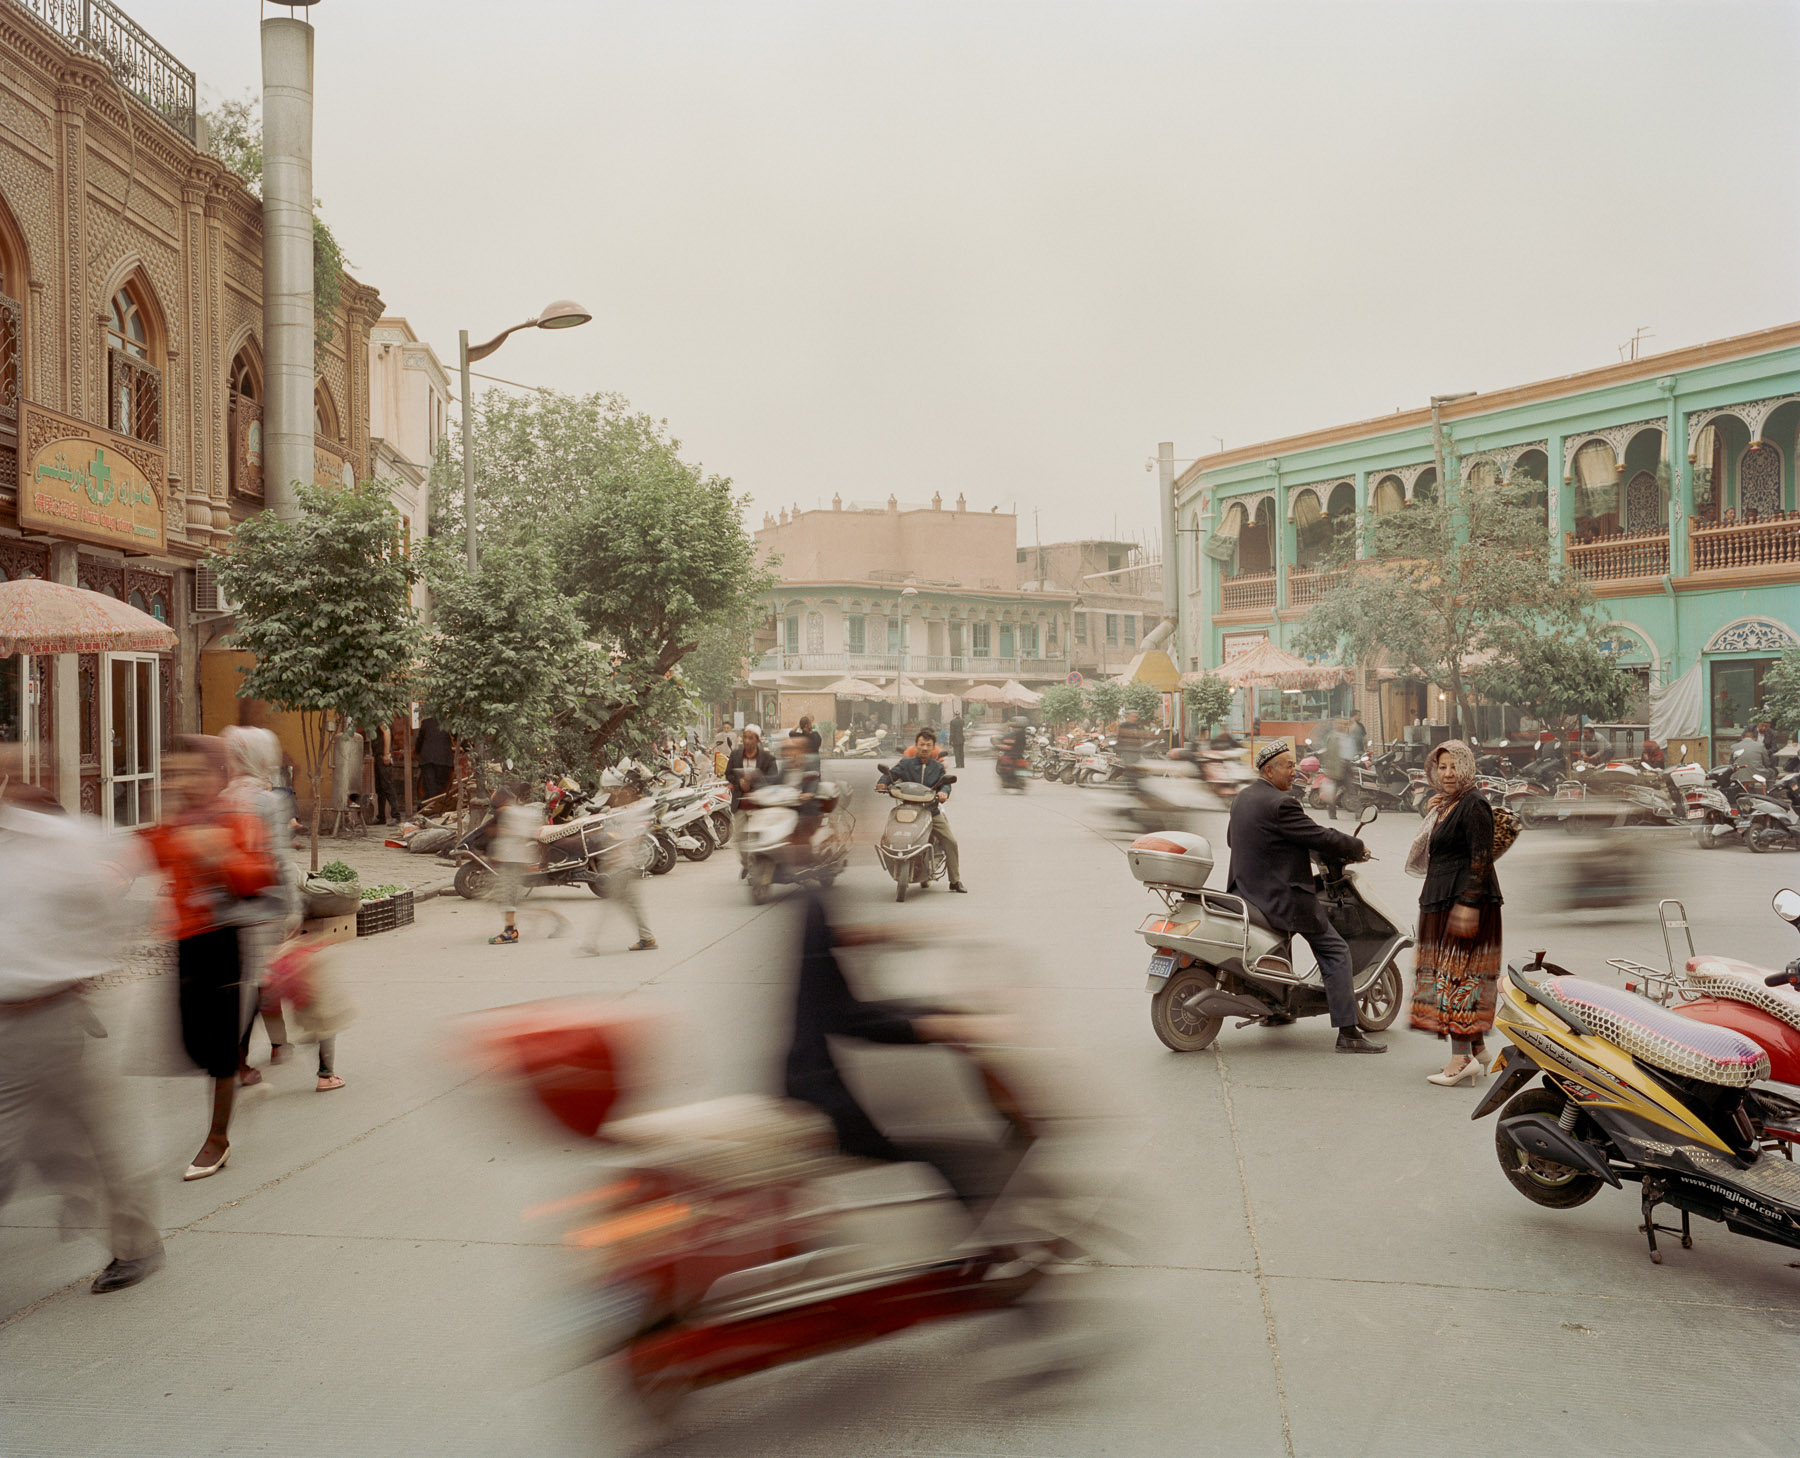  May 2016. Xinjiang province, China. View from the old city of Kashgar.  